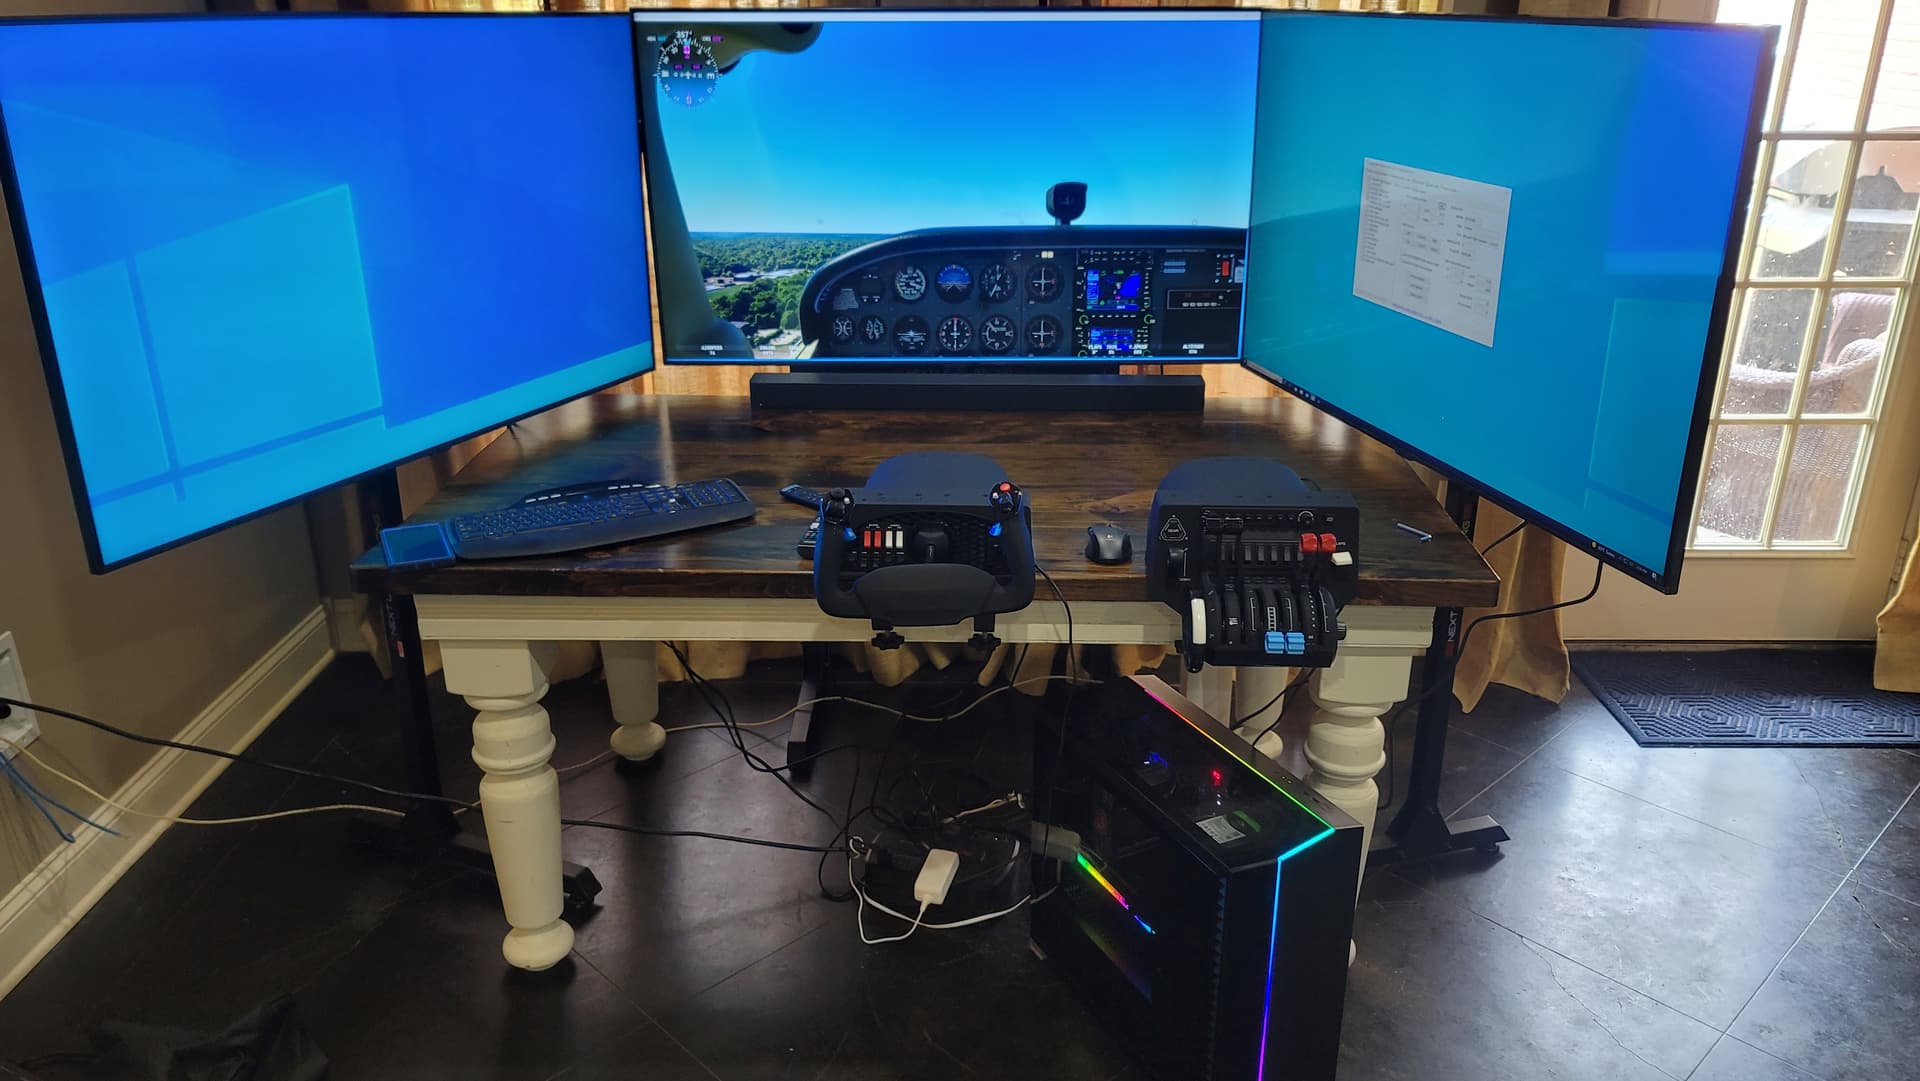 Academie Draaien verkiezen 3 monitor setup MSFS 2020 - Tech Support - Microsoft Flight Simulator Forums